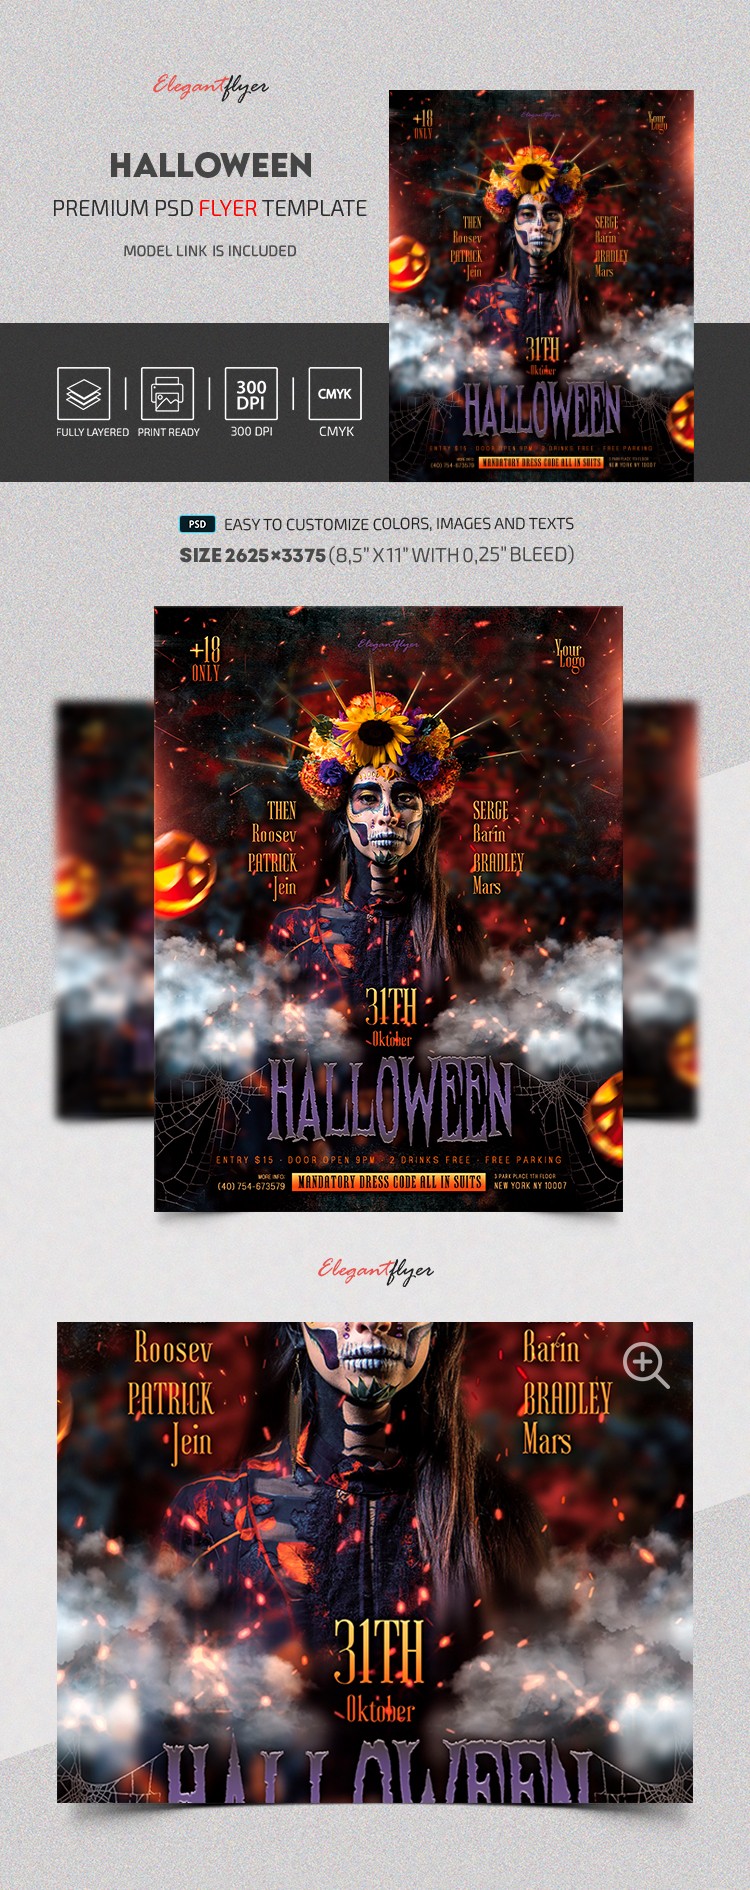 Smoky Halloween Flyer by ElegantFlyer